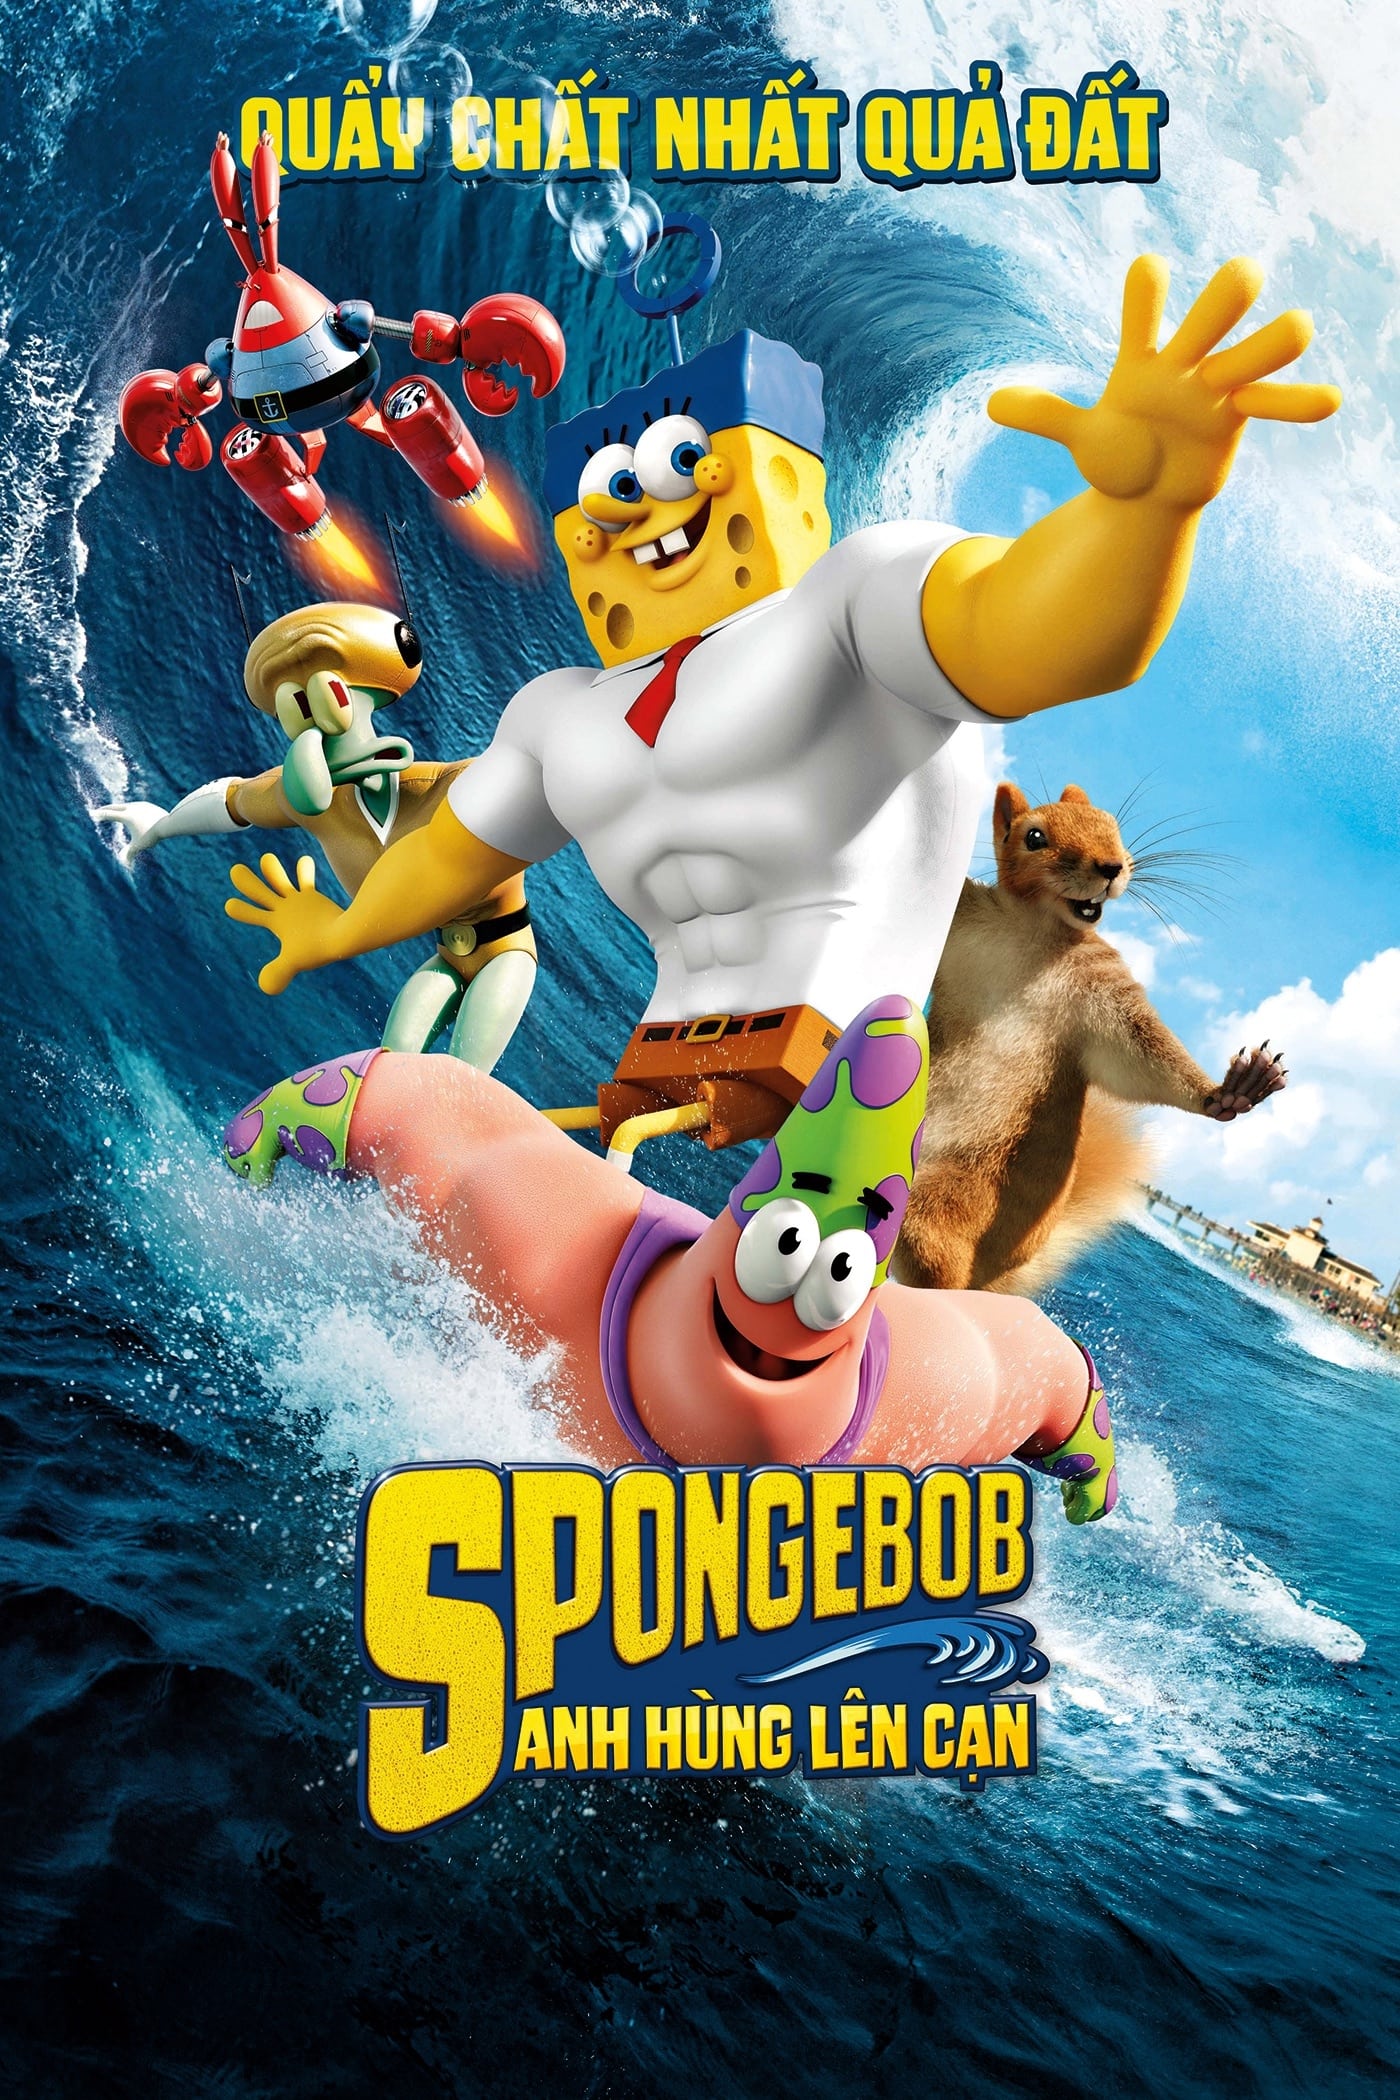 SpongeBob: Anh Hùng Lên Cạn (The SpongeBob Movie: Sponge Out of Water) [2015]